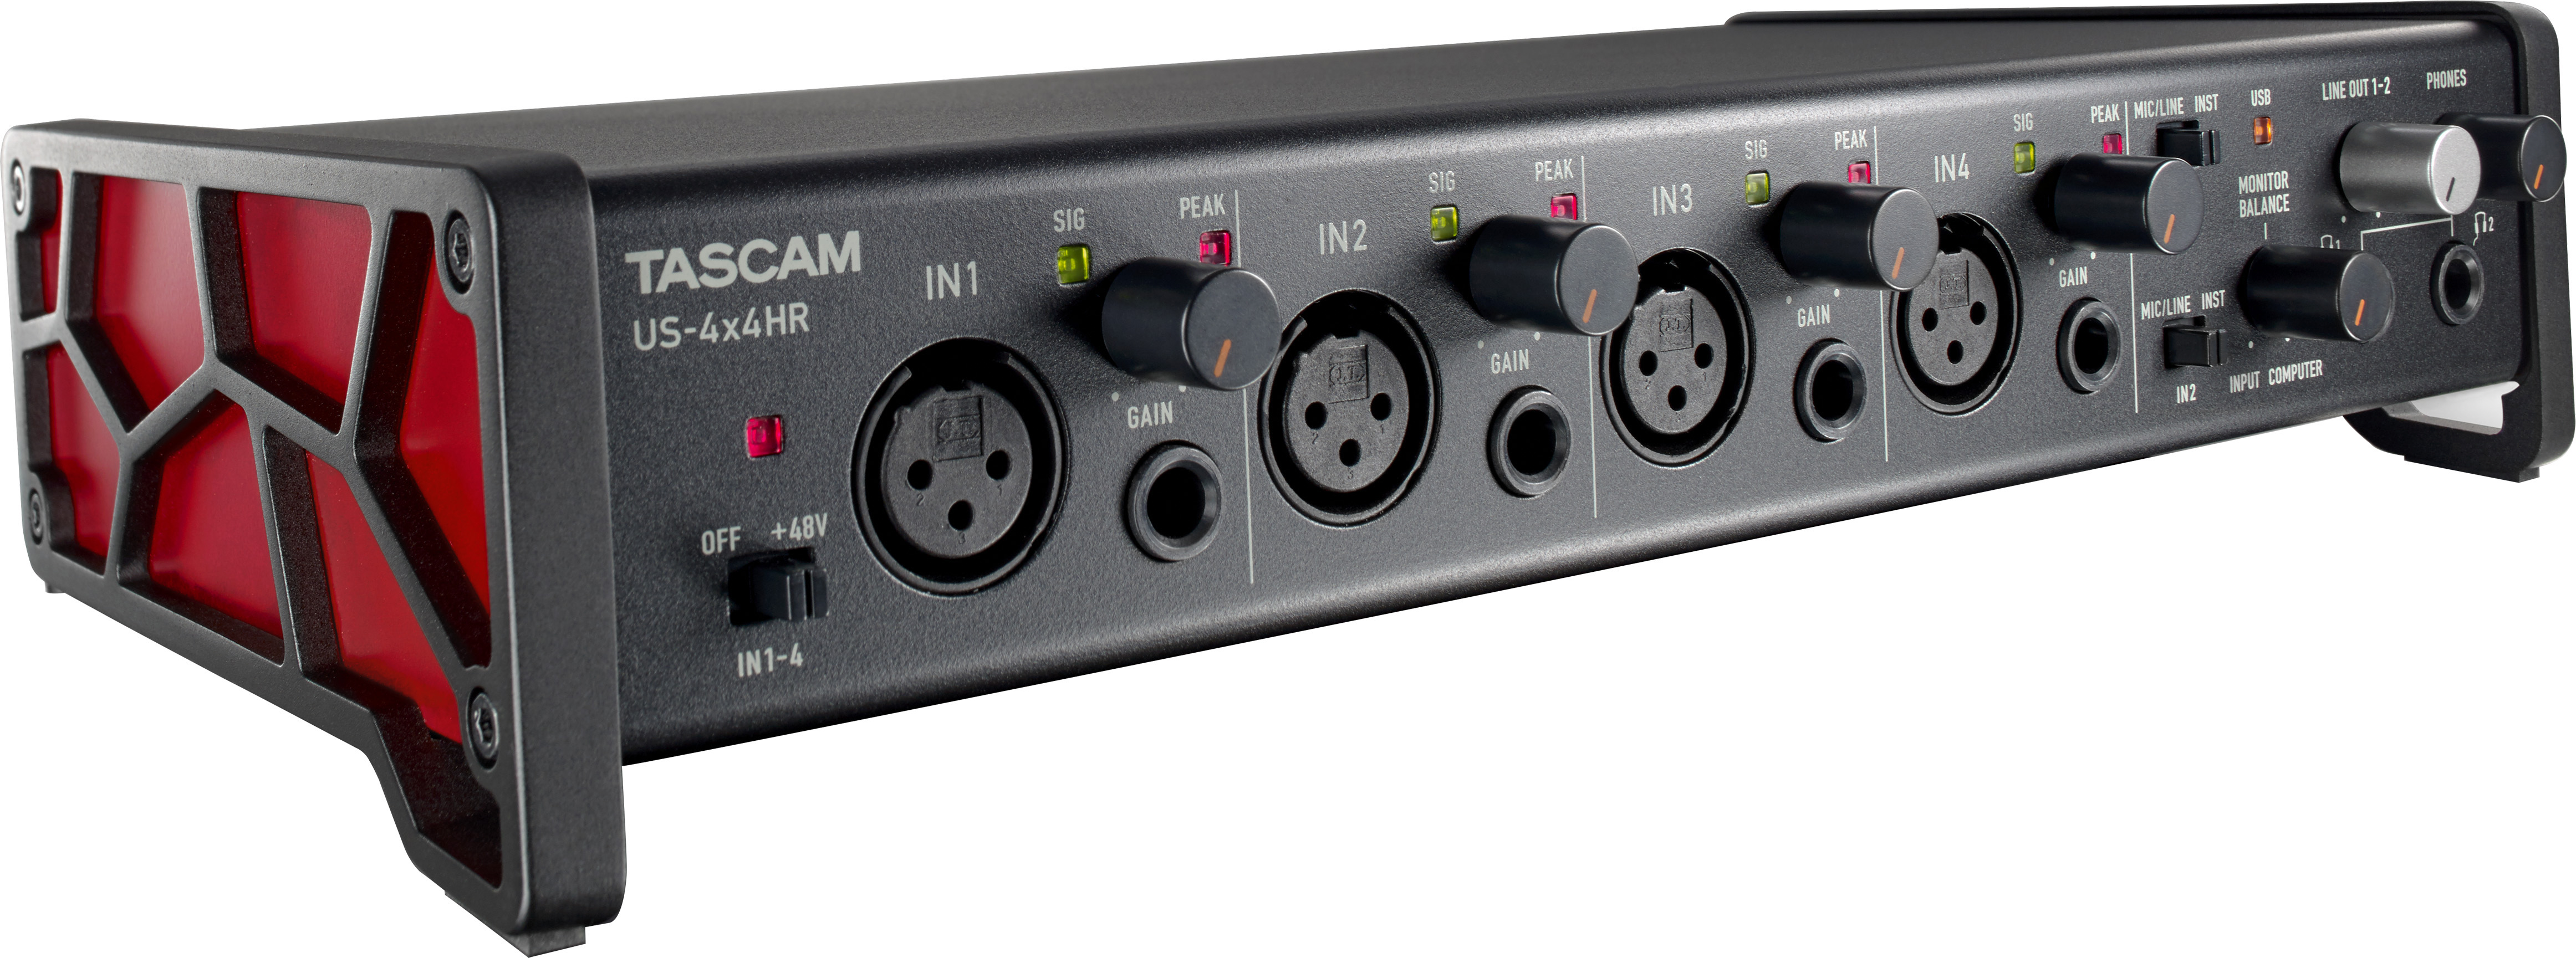 Tascam Us-4x4hr - USB audio interface - Variation 1